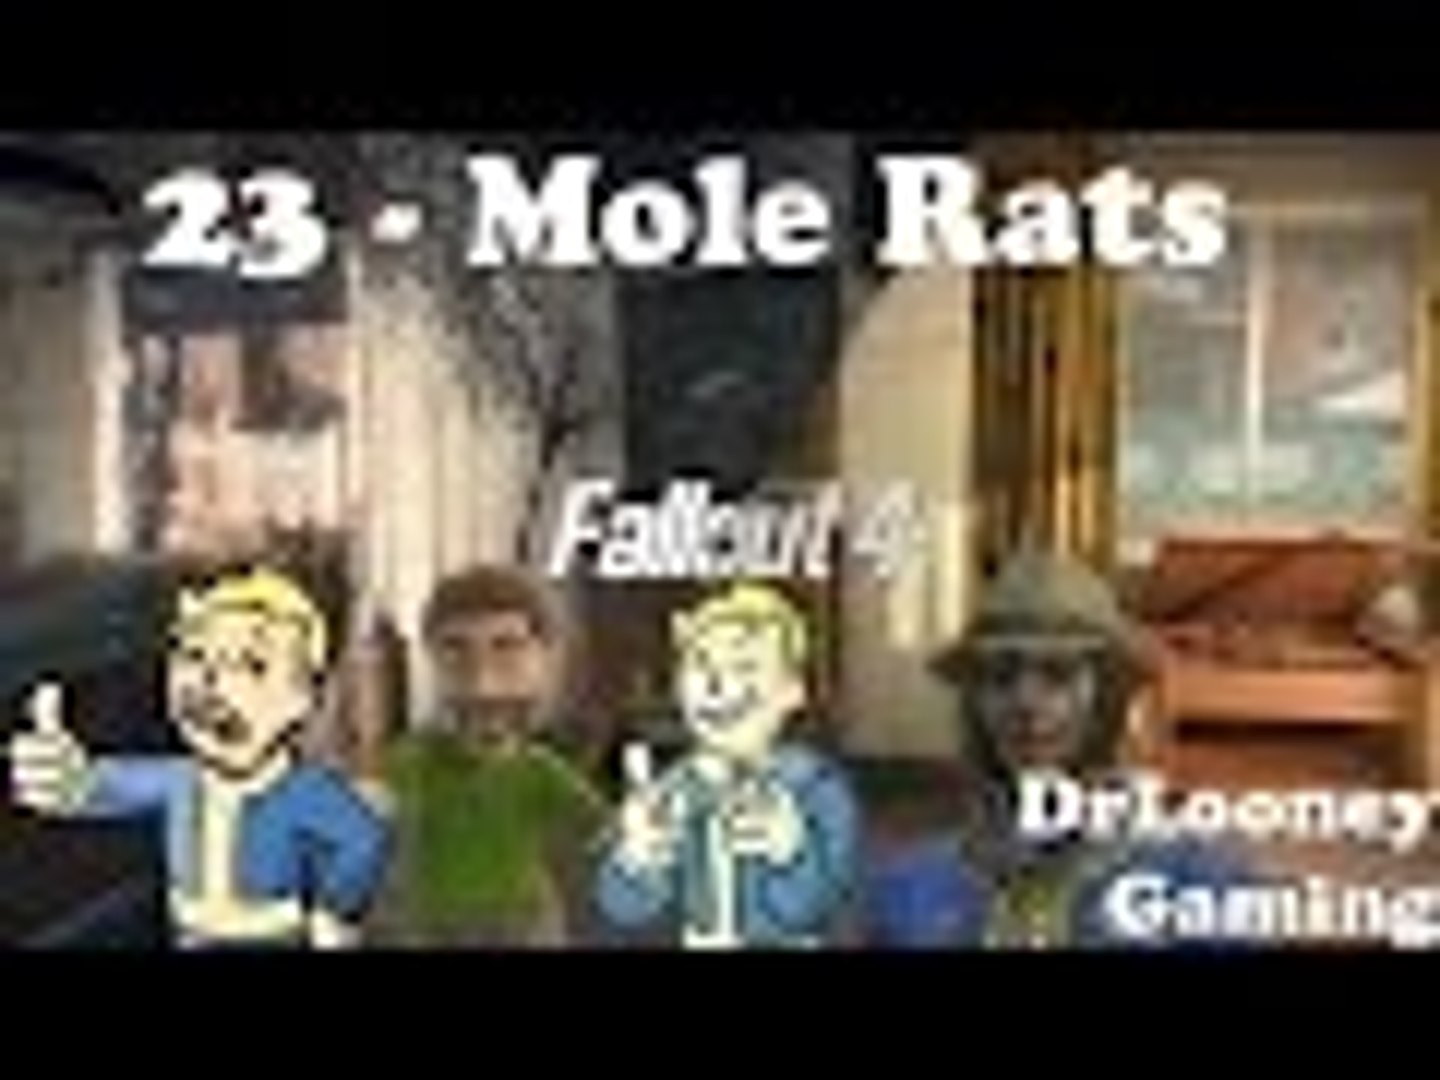 Mole Rats (23) - Fallout 4